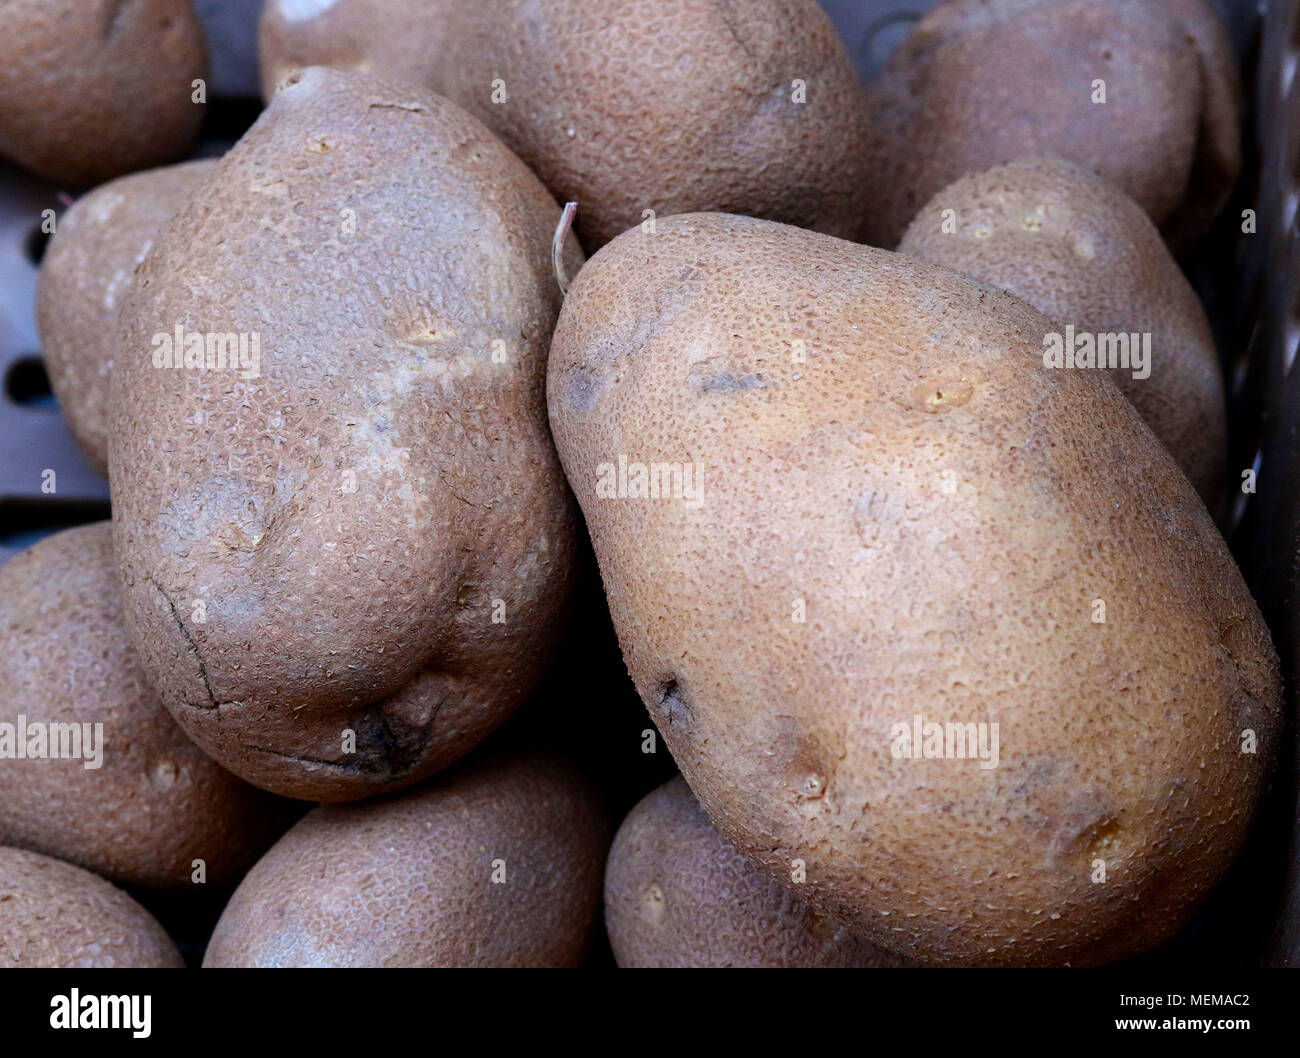 Amey Russet Potatoes at Farmer's Market Stock Photo